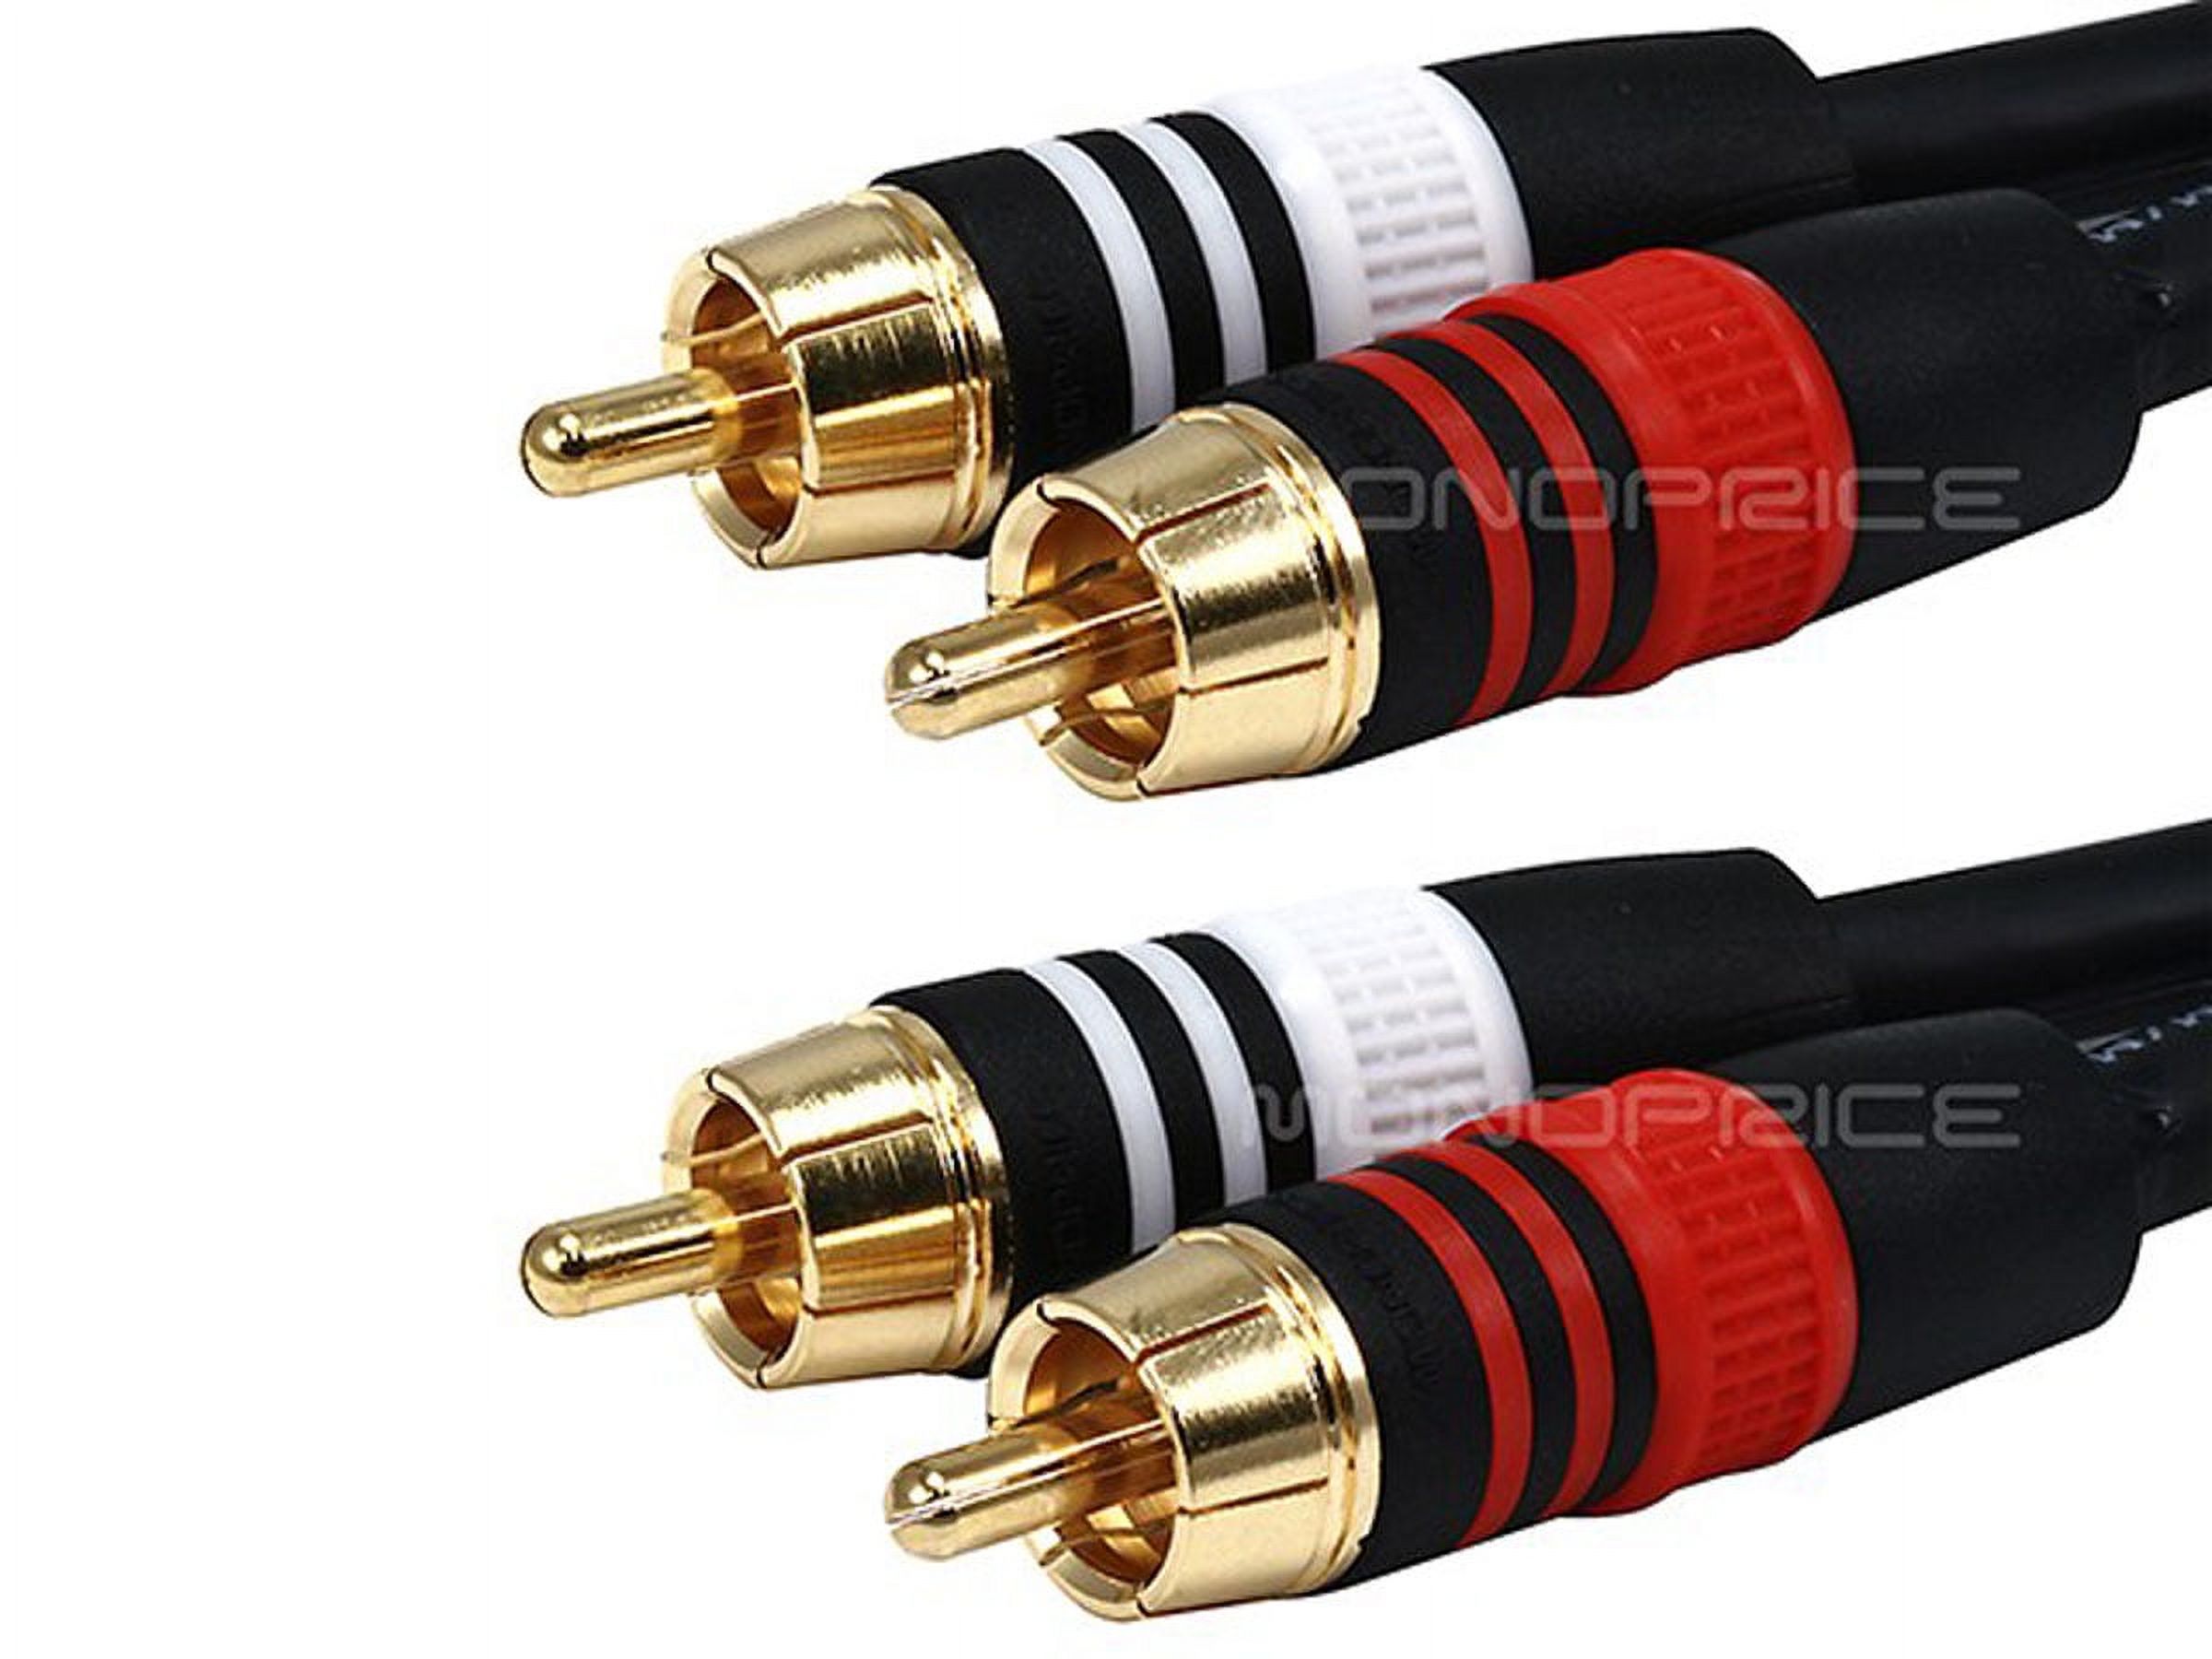 Monoprice Premium RCA Cable - 75 Feet - Black | 2 RCA Plug to 2 RCA Plug, Male to Male, 22AWG - image 2 of 2